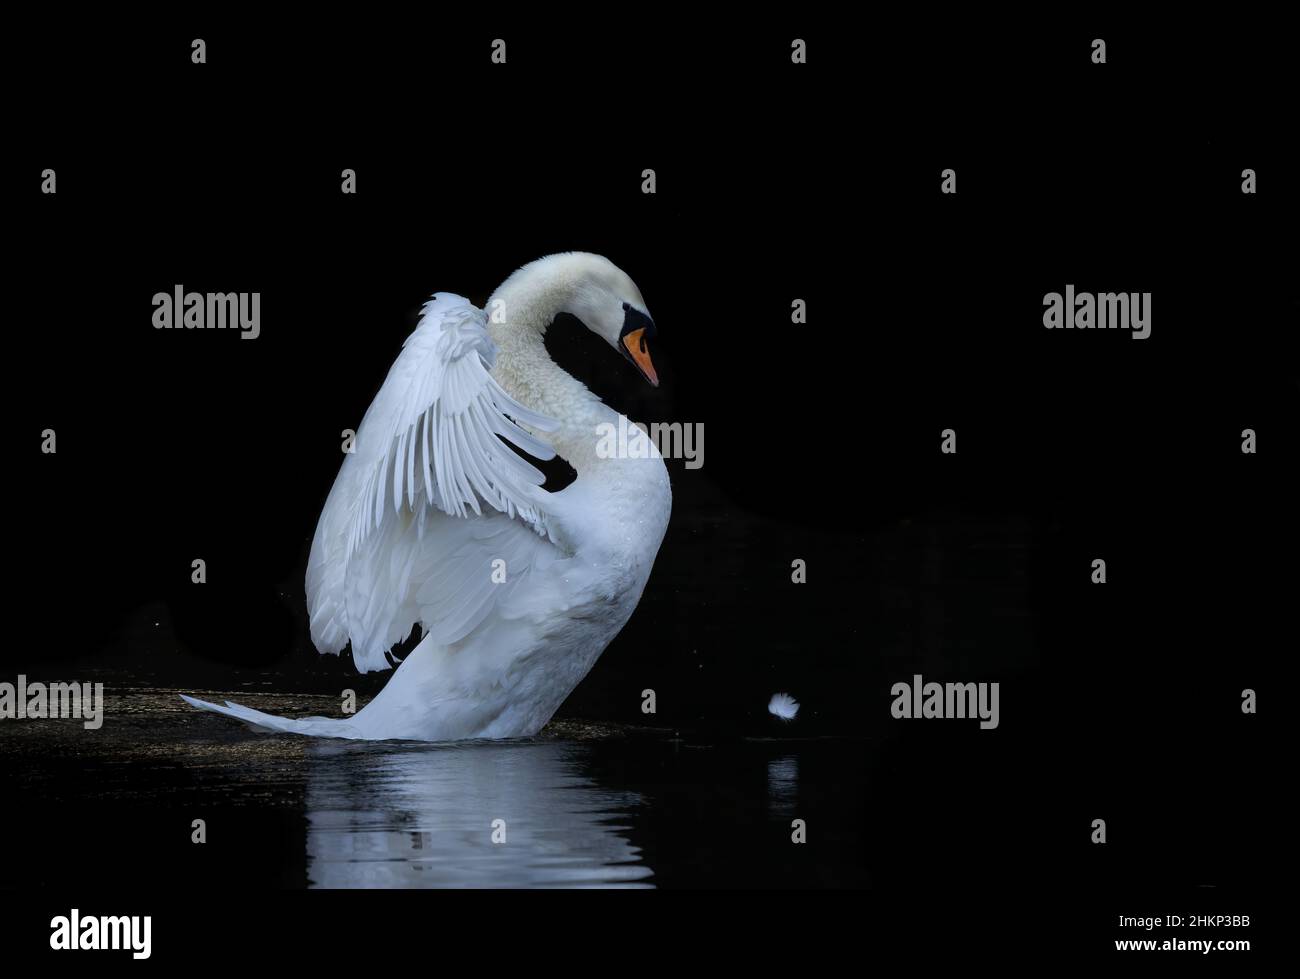 Swan preening against dark background Stock Photo